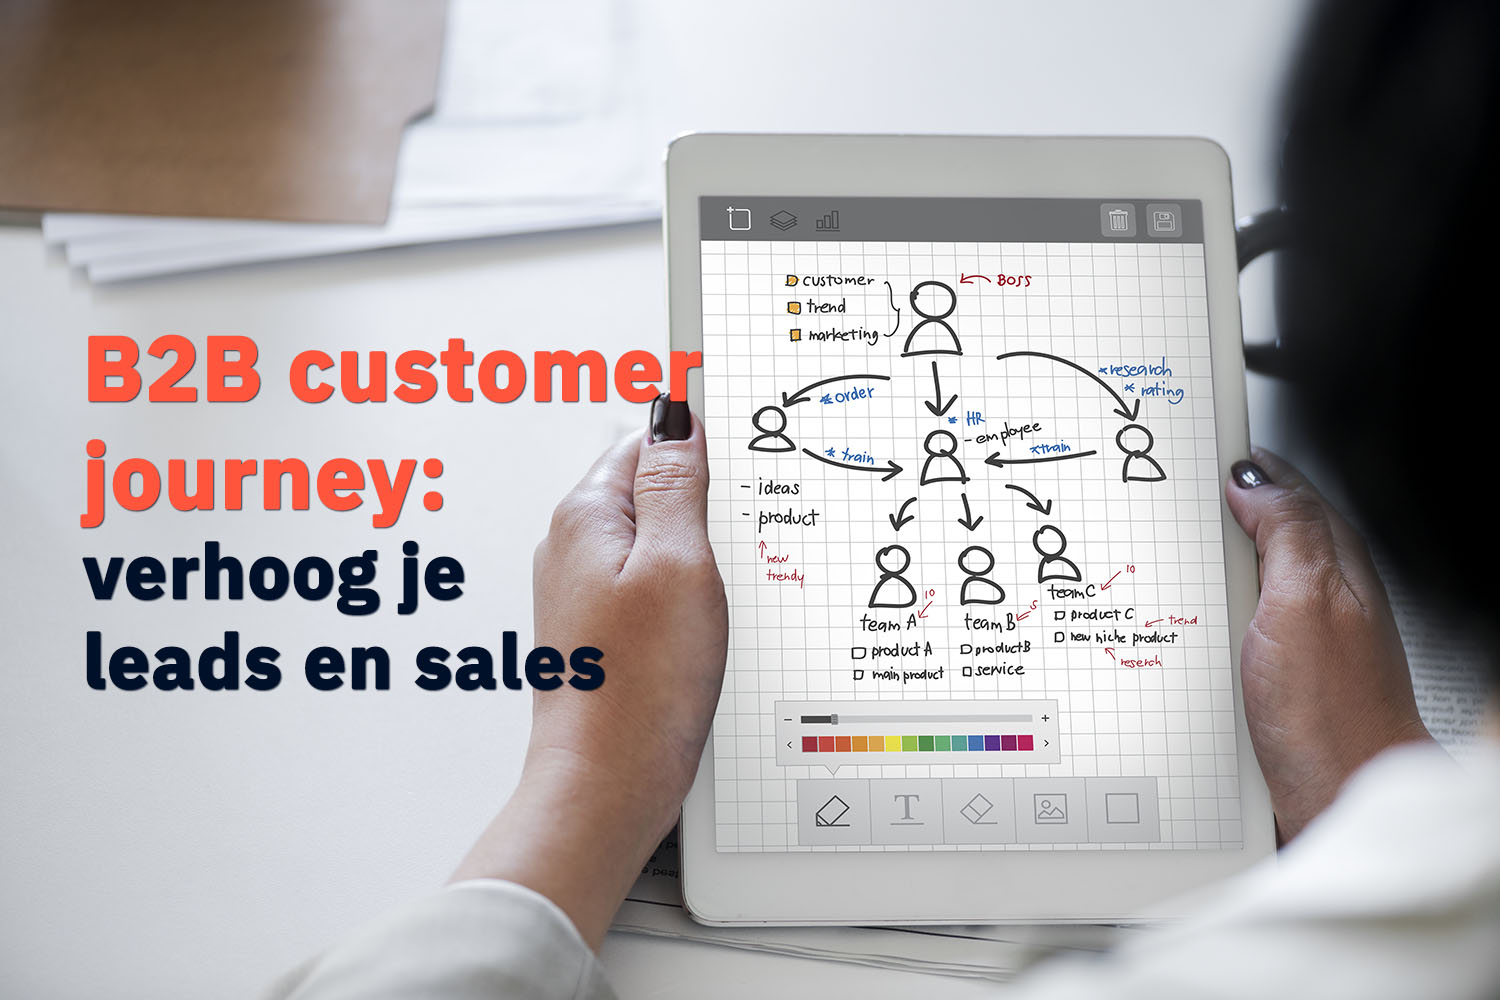 B2B customer journey: verhoog je leads en sales